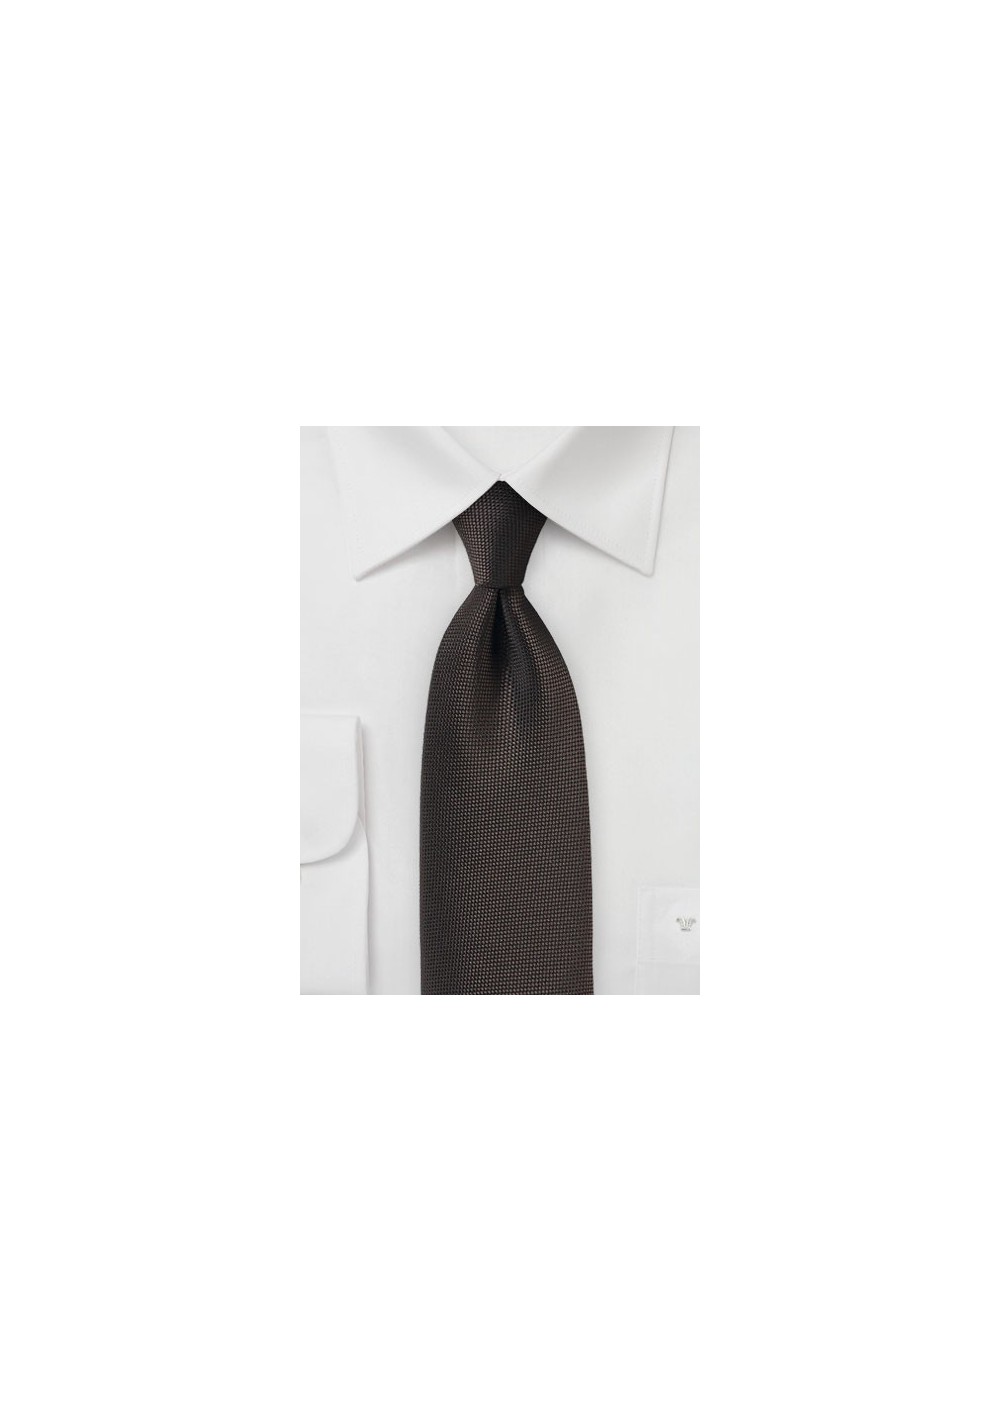 Matte Woven Tie in Dark Brown